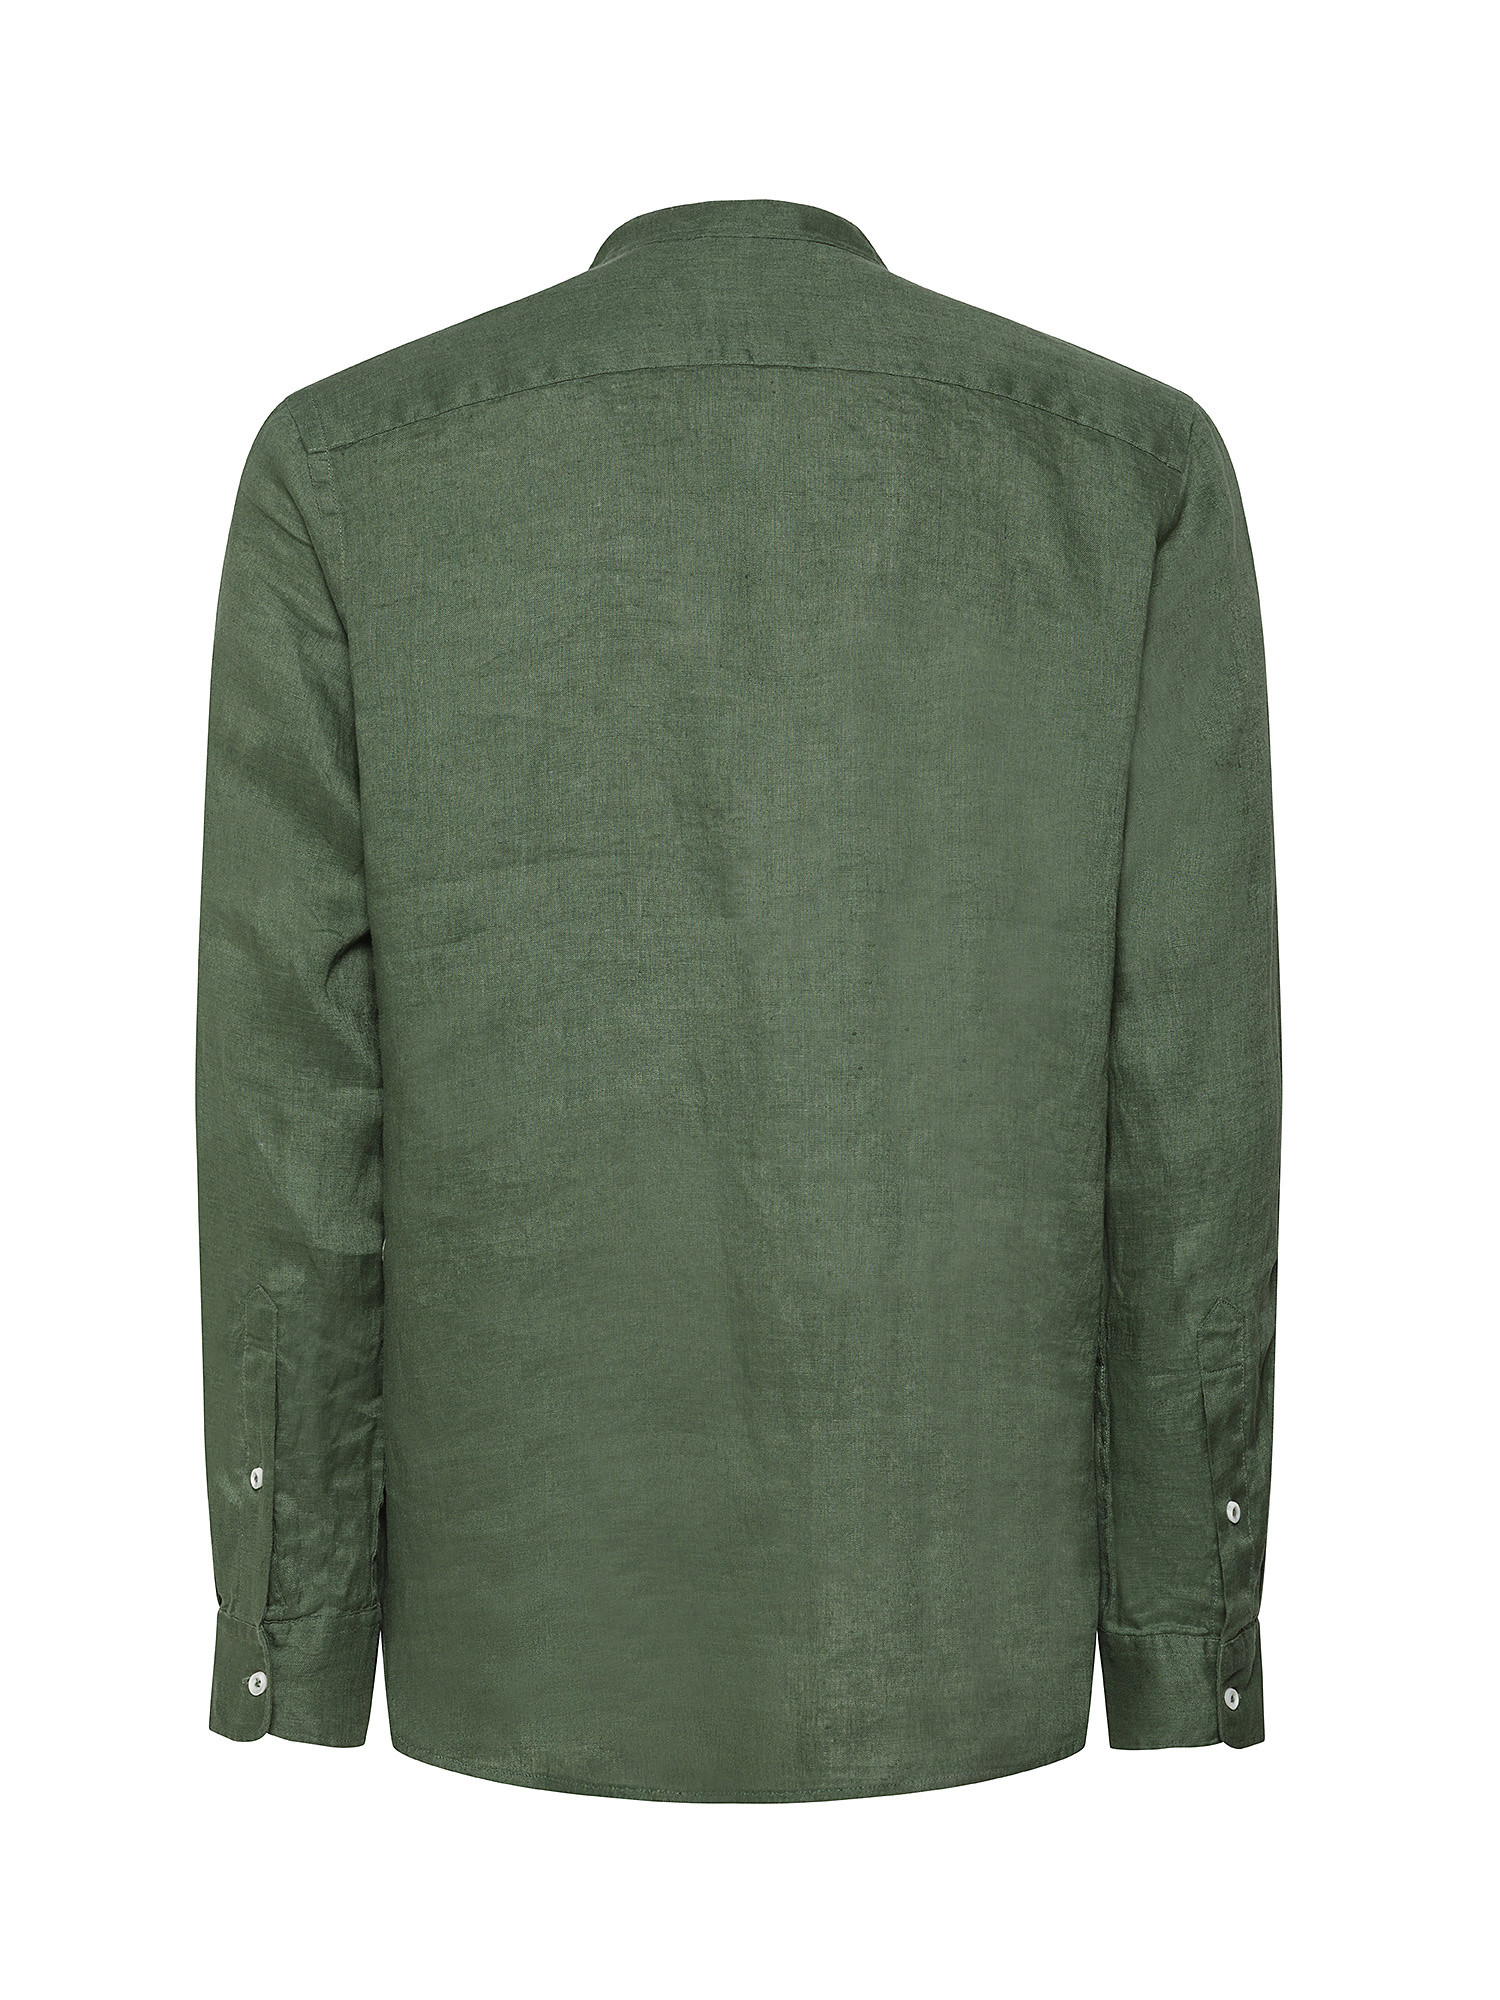 JCT - Pure linen Korean shirt, Dark Green, large image number 1